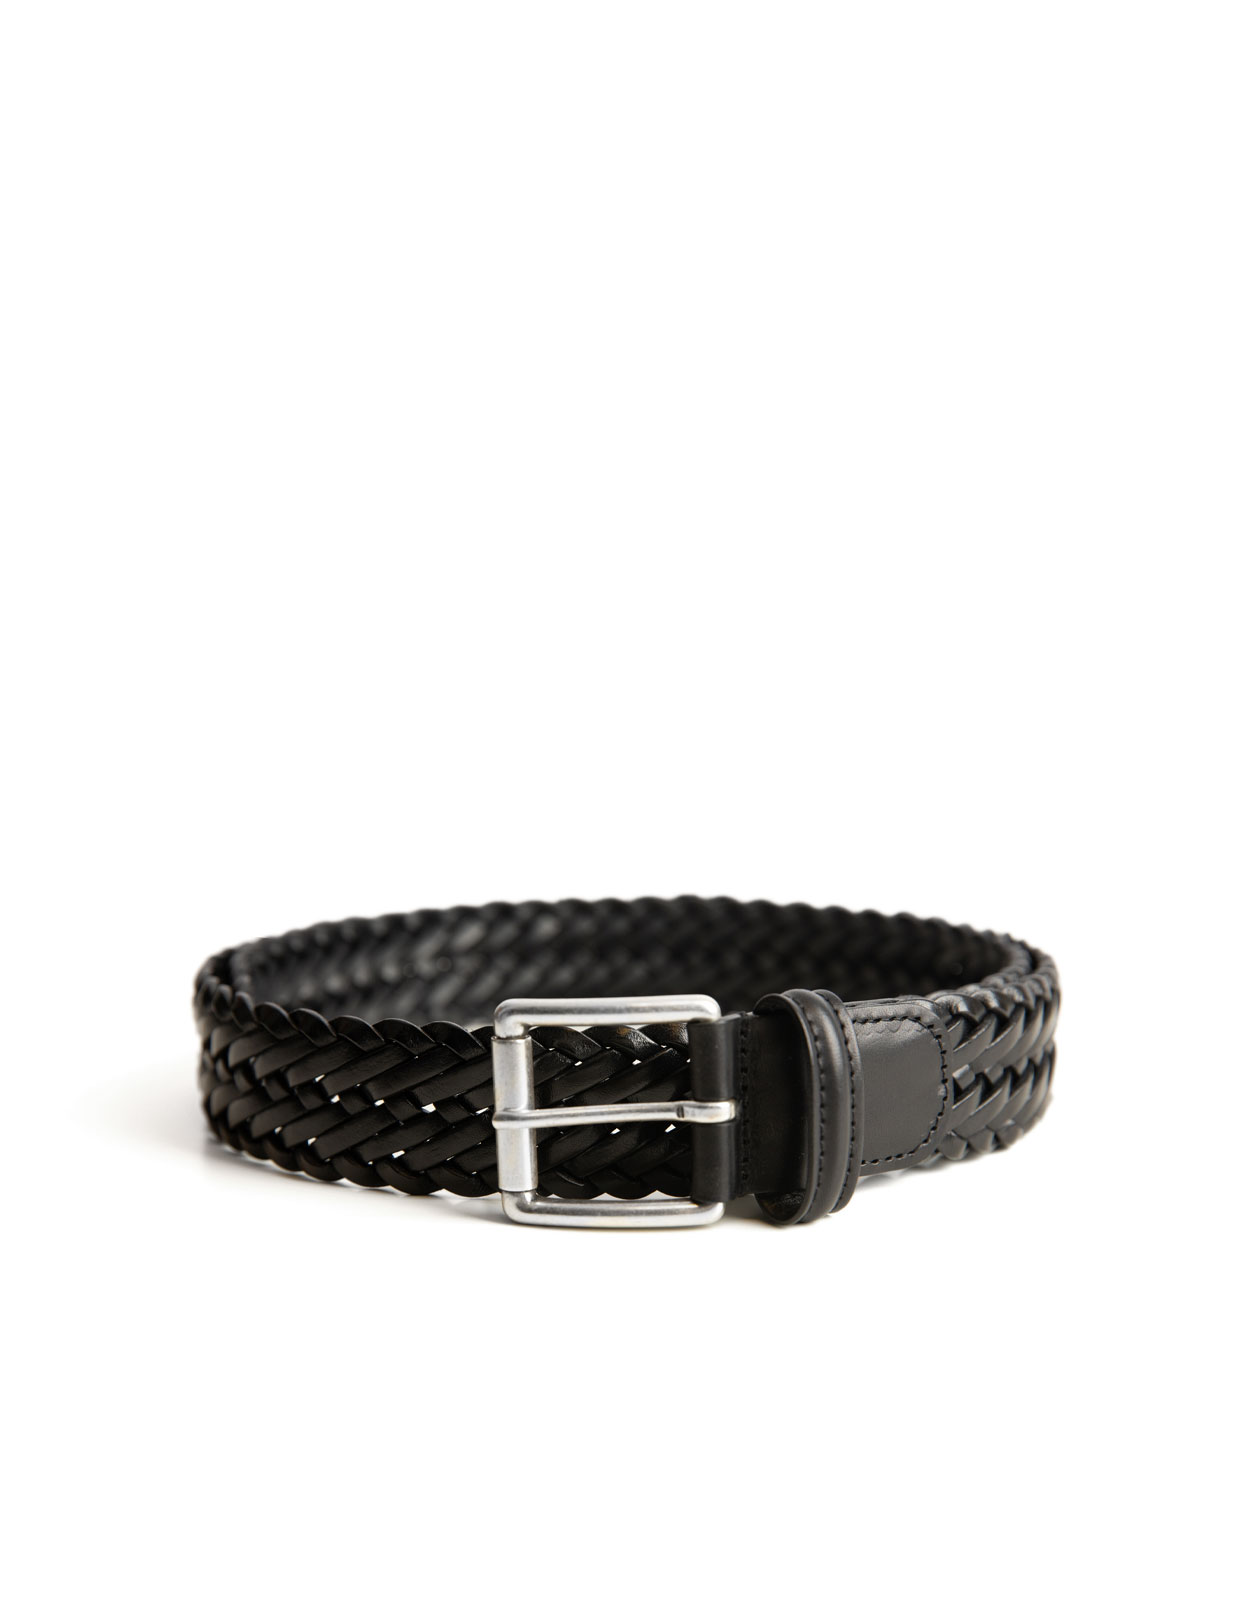 Braided Leather Belt Black Stl 85